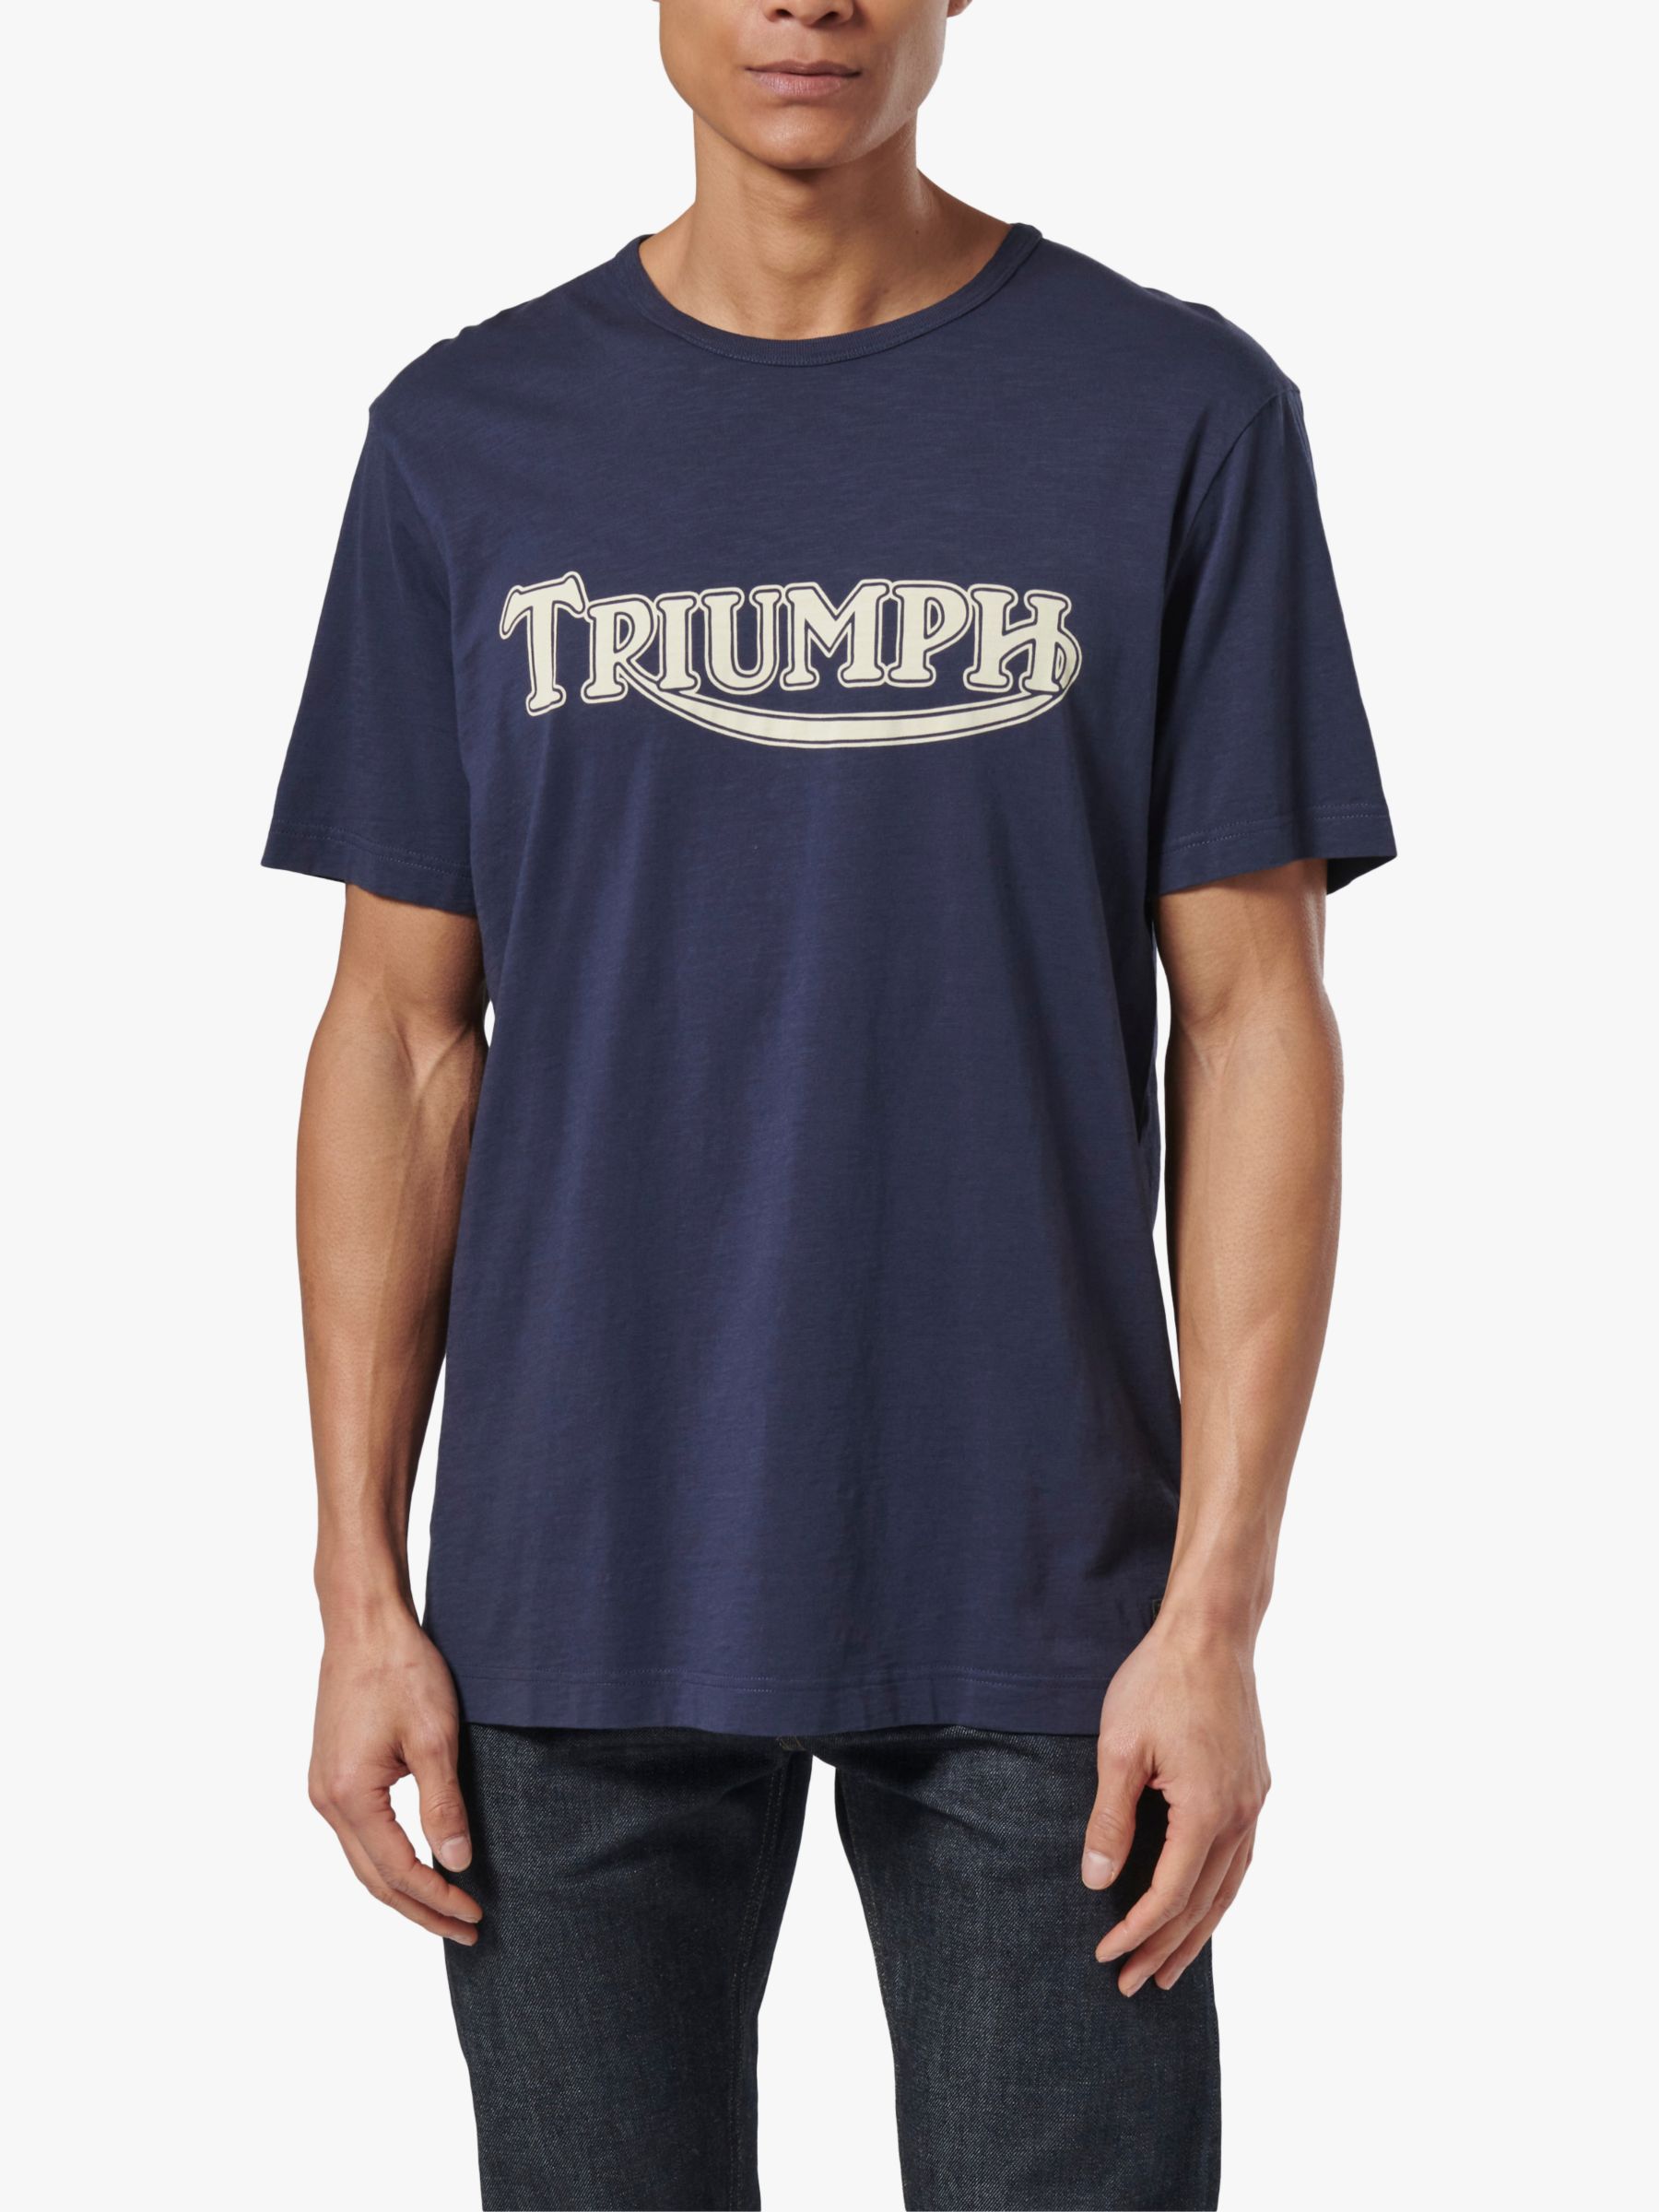 Triumph Motorcycles Fork Seal T-Shirt, Indigo, L